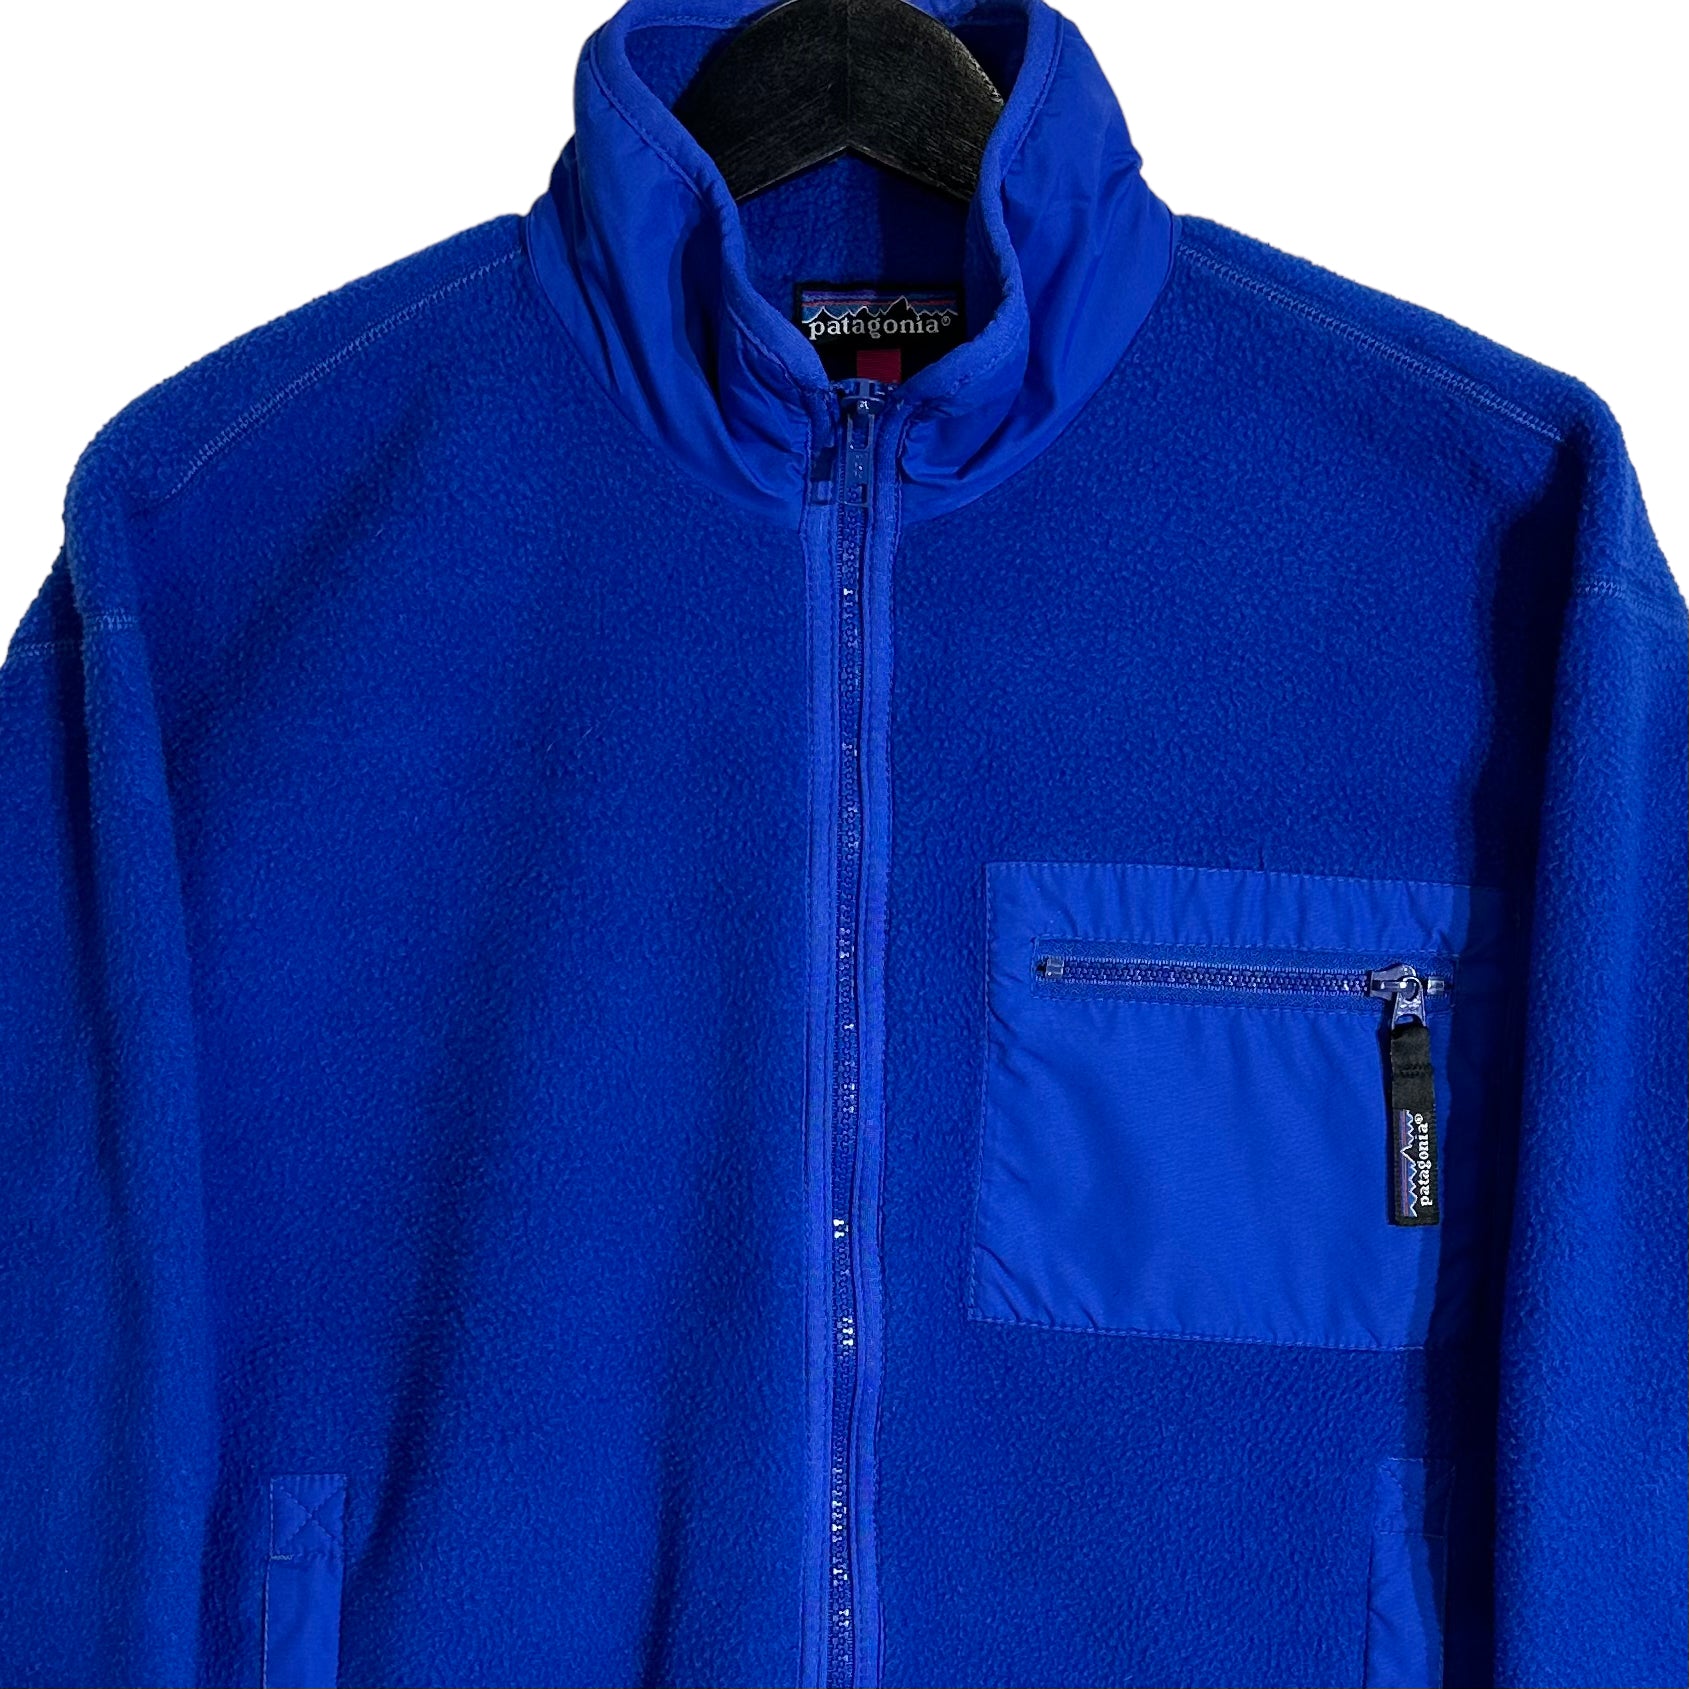 Vintage Patagonia Full Zip Warm-Up Jacket